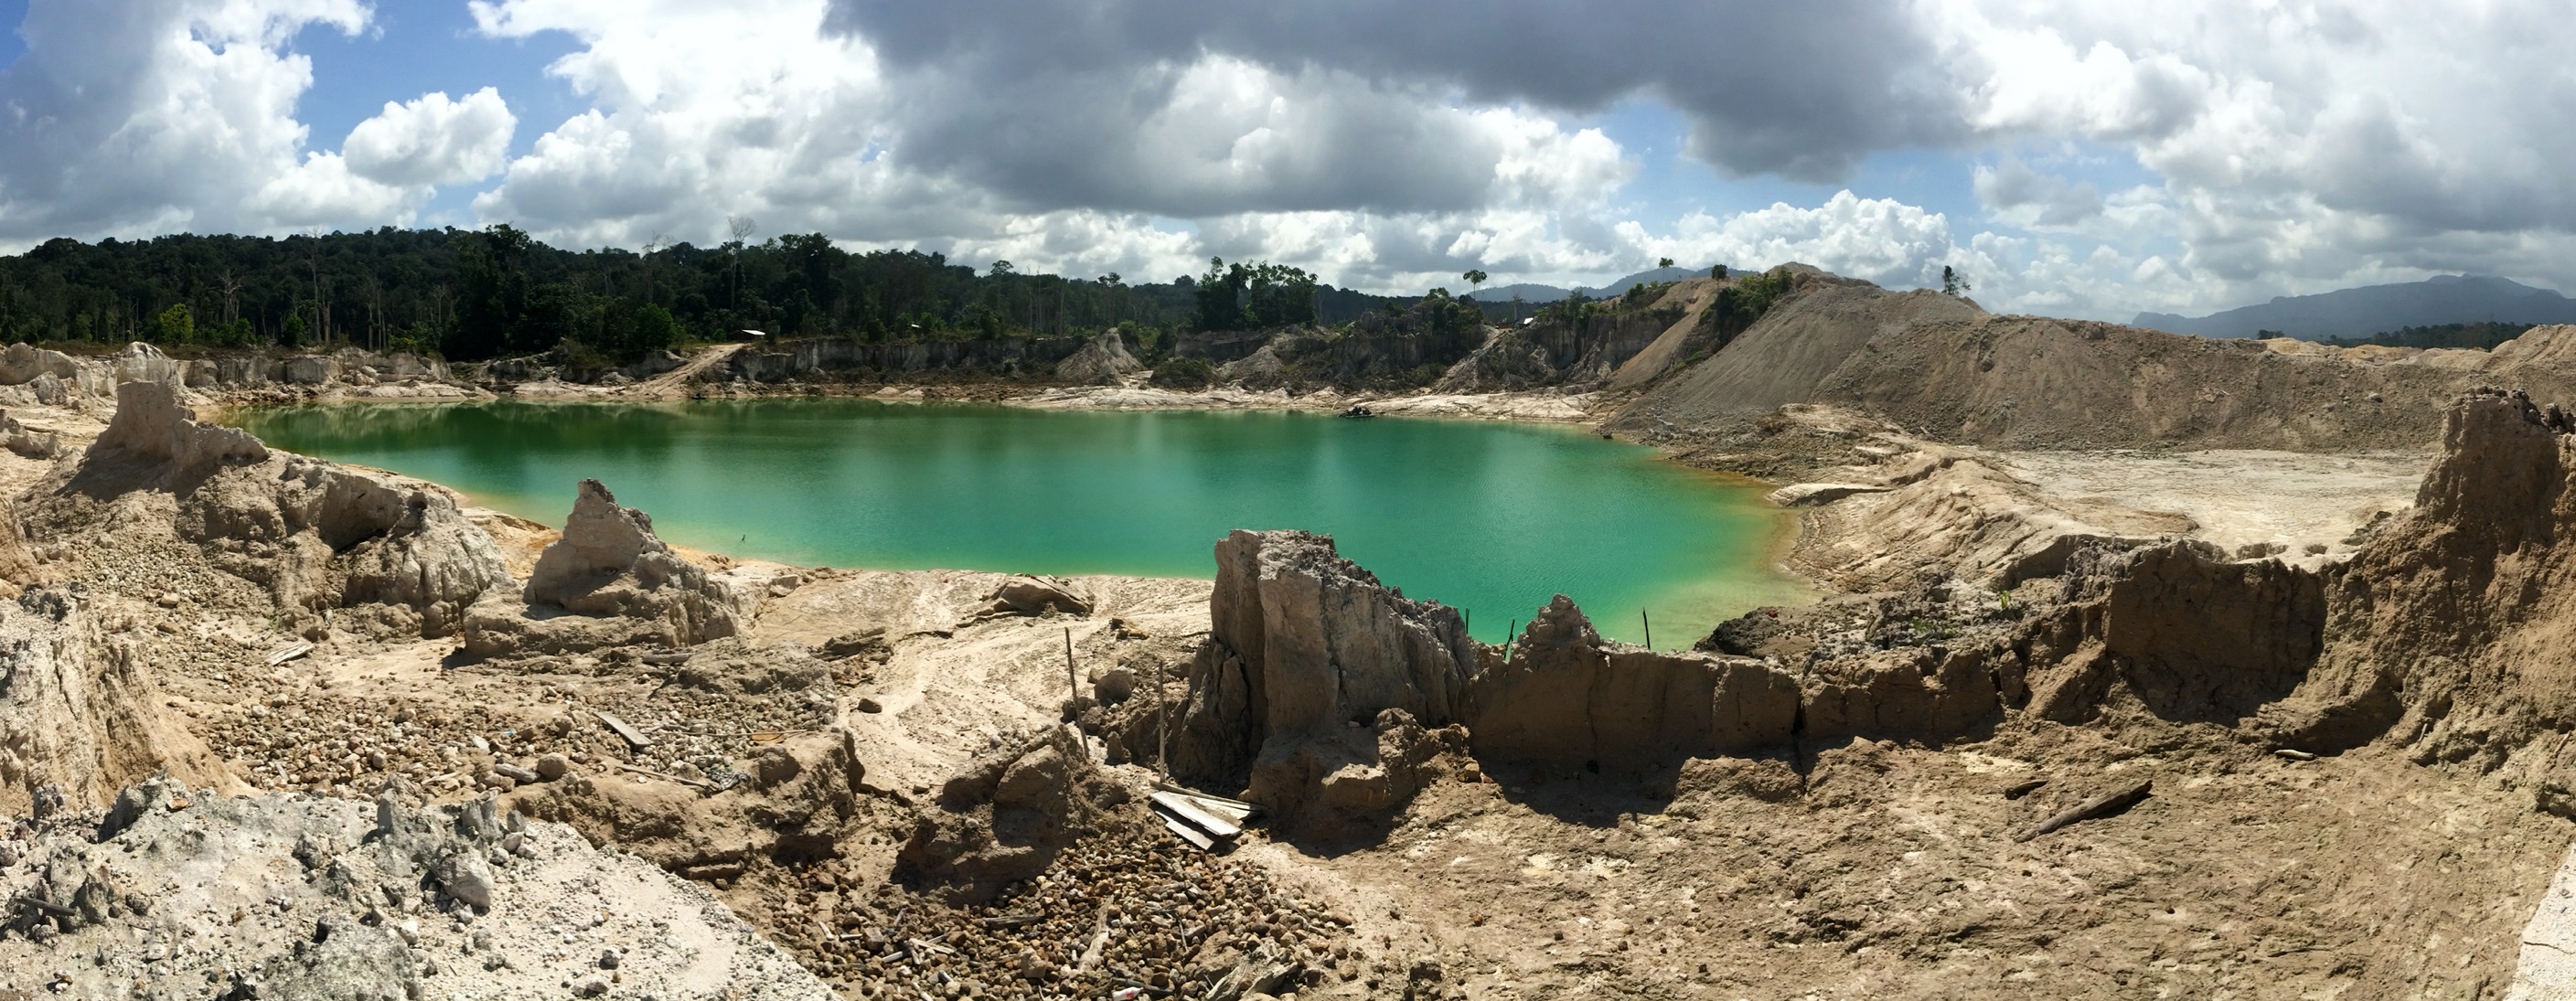 Tailing pond and mining pit landscape at mining site near Mahdia, Guyana 